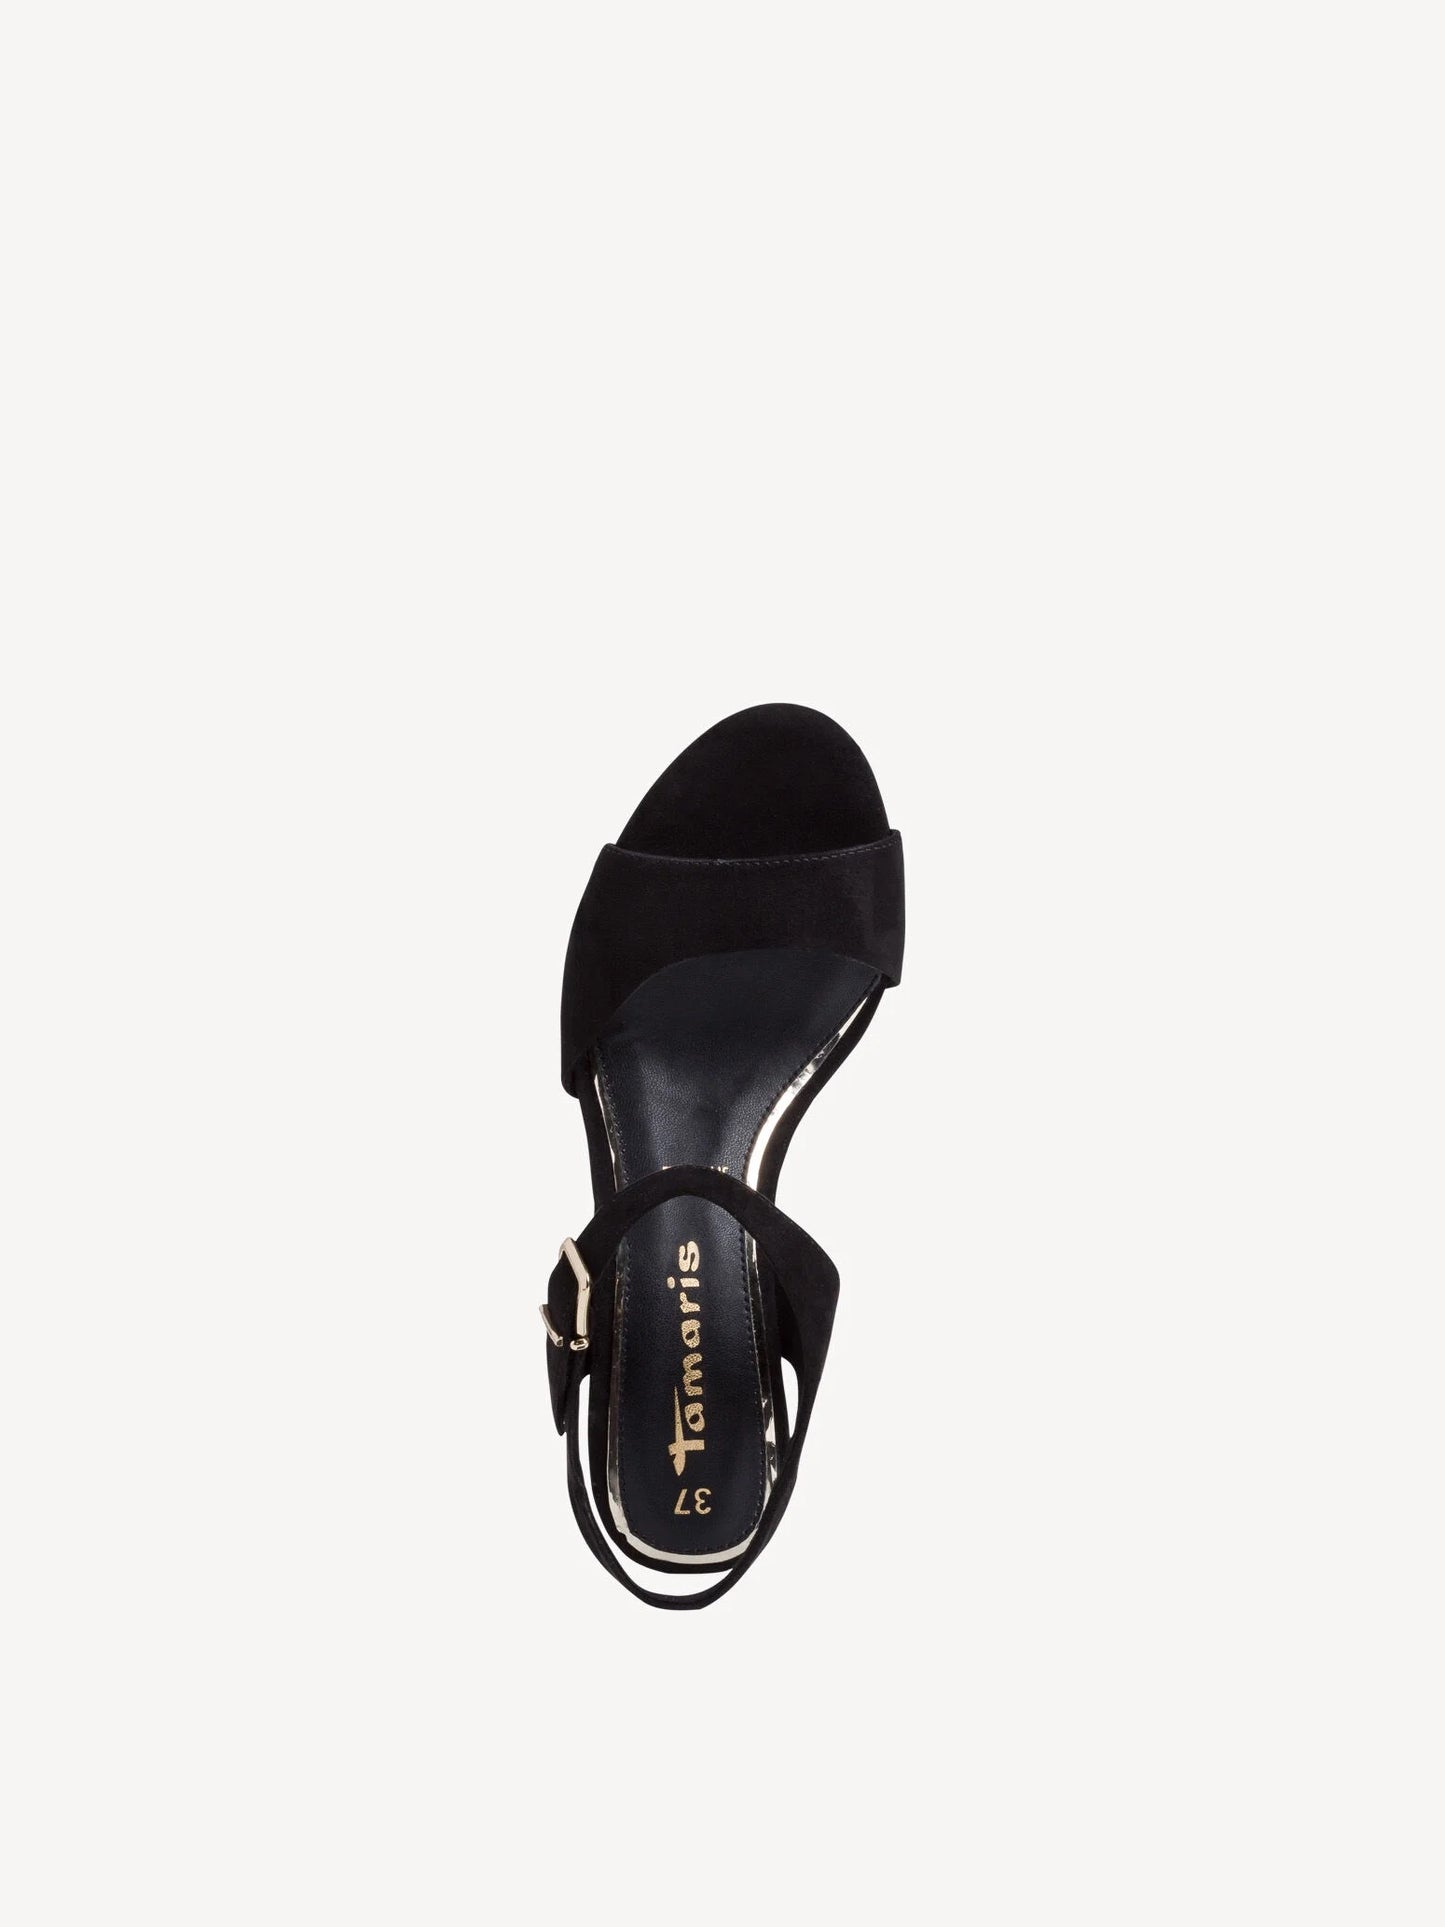 Tamaris Women's 1-28009-26 Heeled Sandals Black